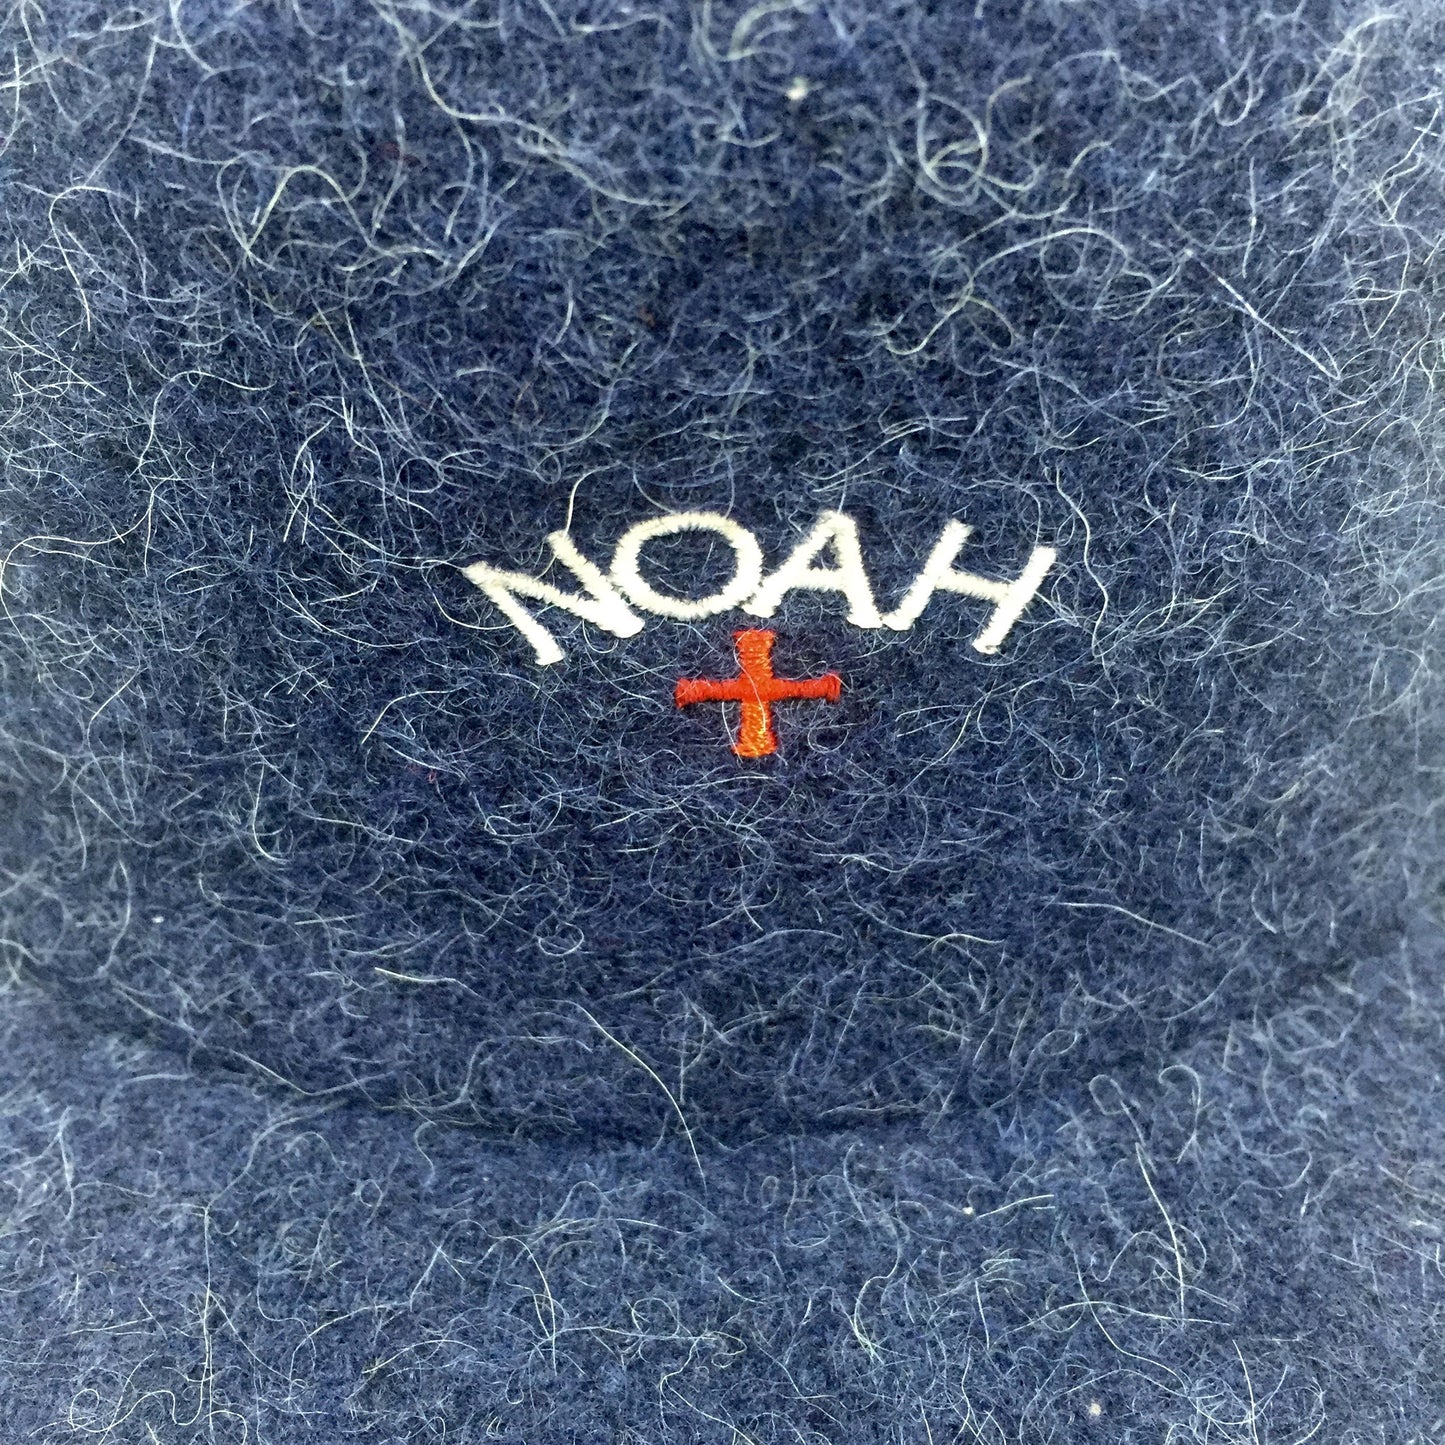 Noah - Navy Mohair Core Logo Hat